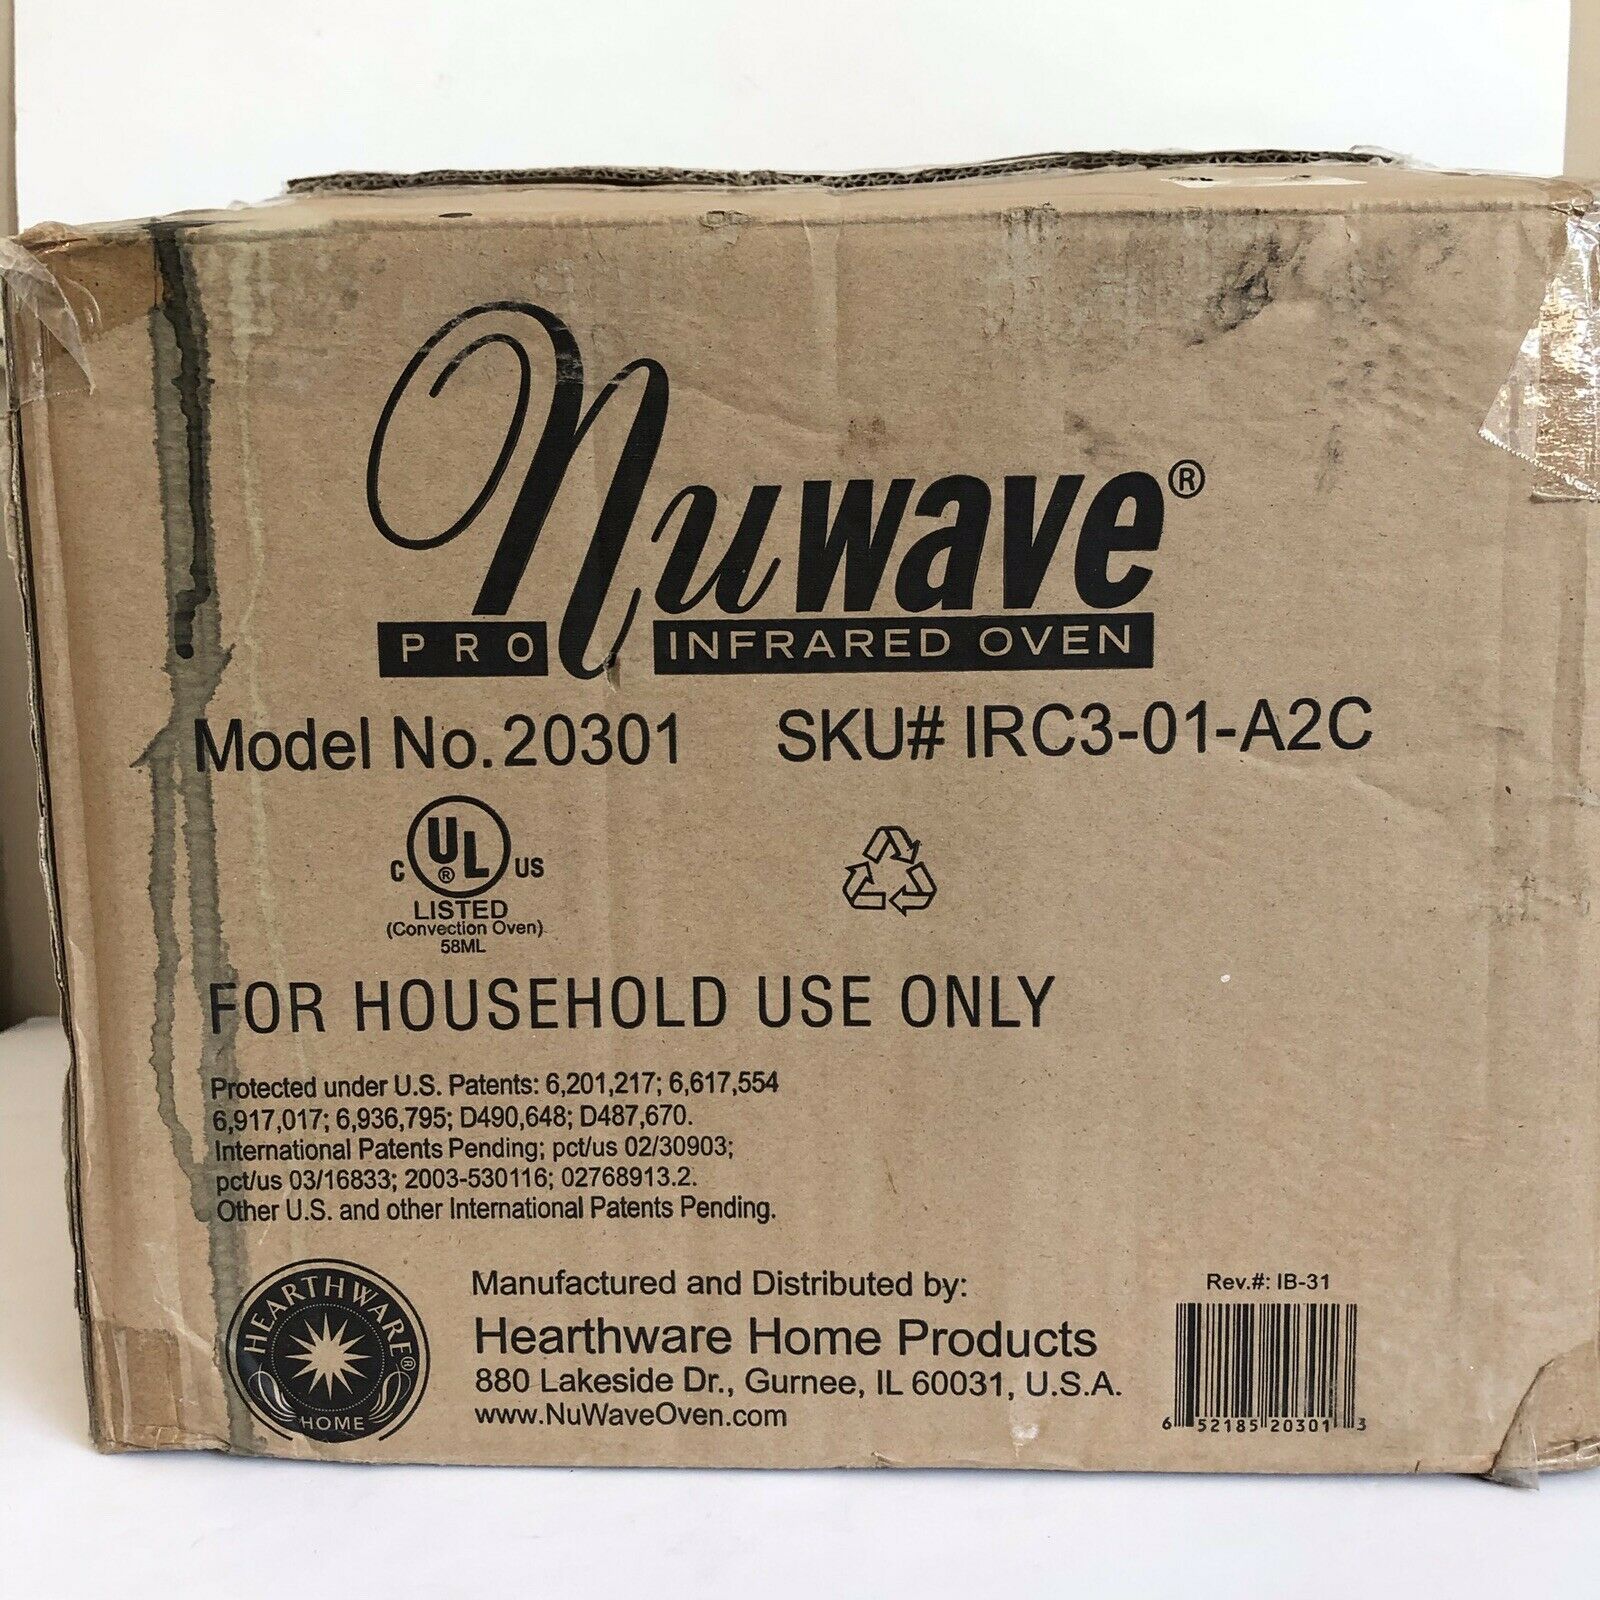 Nuwave Pro Digital Infrared Tabletop Oven Model 20342, White New Open Box.